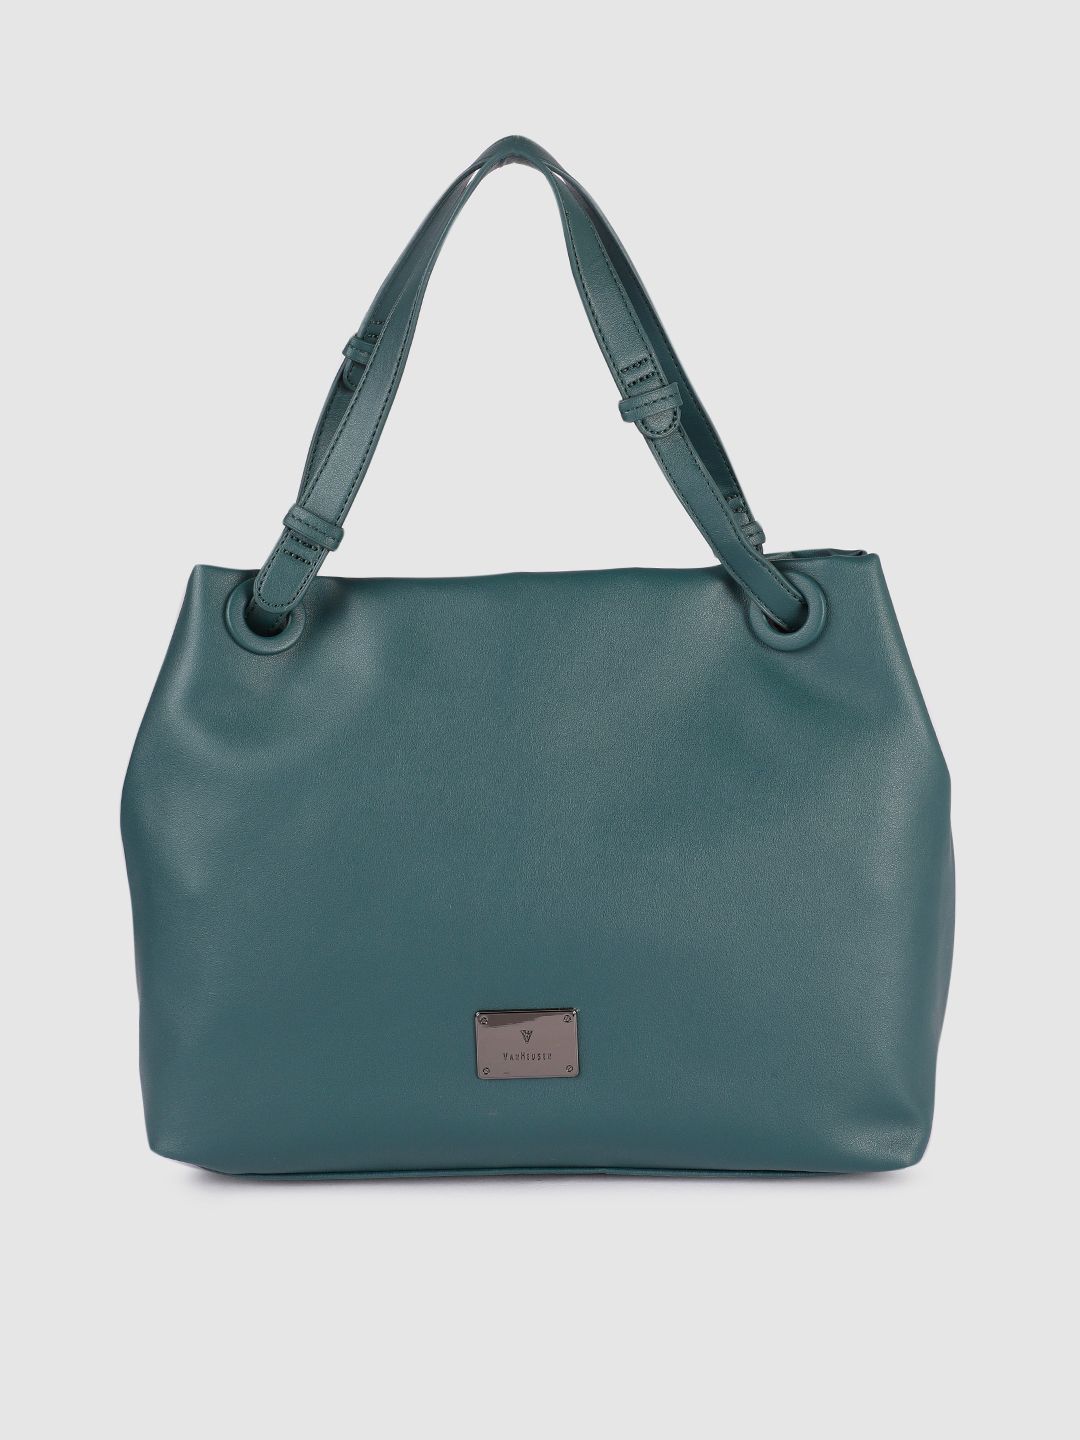 Van Heusen Teal Green Solid Structured Shoulder Bag Price in India